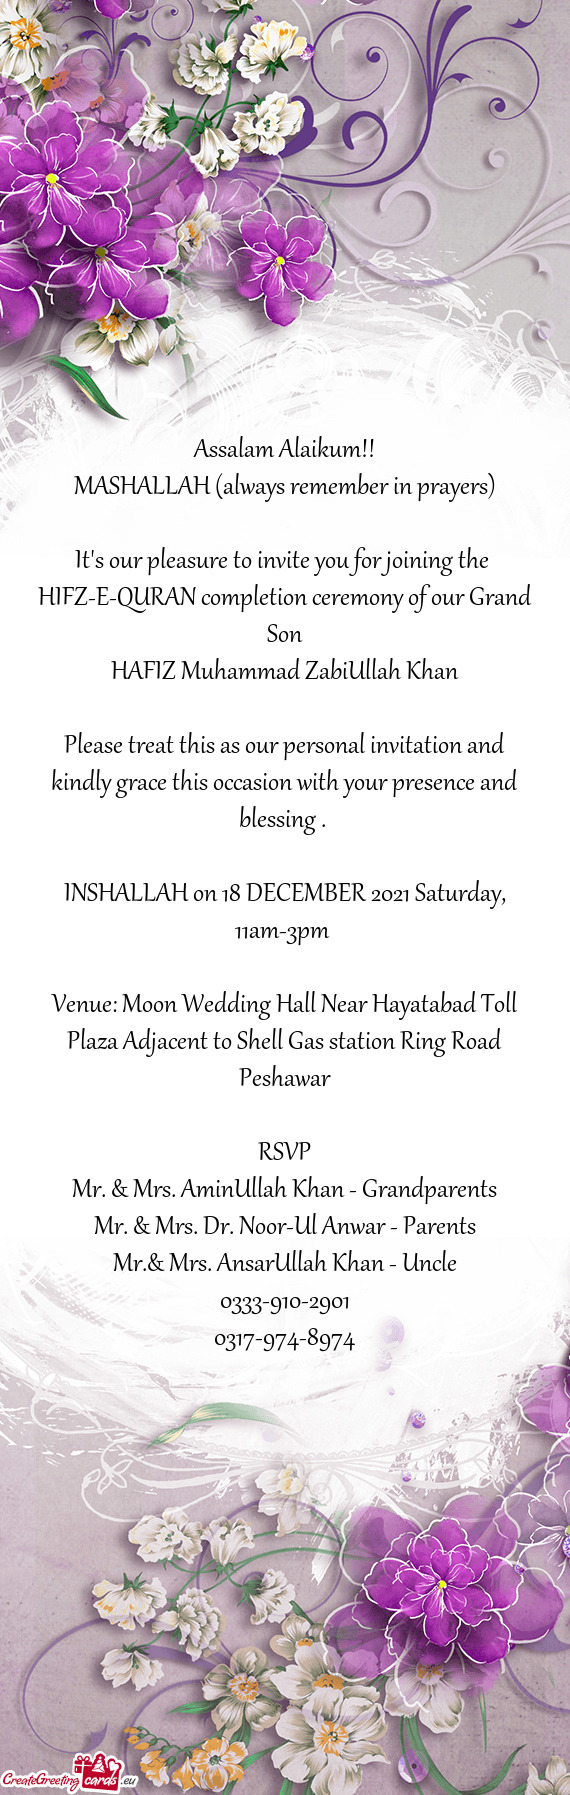 Venue: Moon Wedding Hall Near Hayatabad Toll Plaza Adjacent to Shell Gas station Ring Road Peshawar